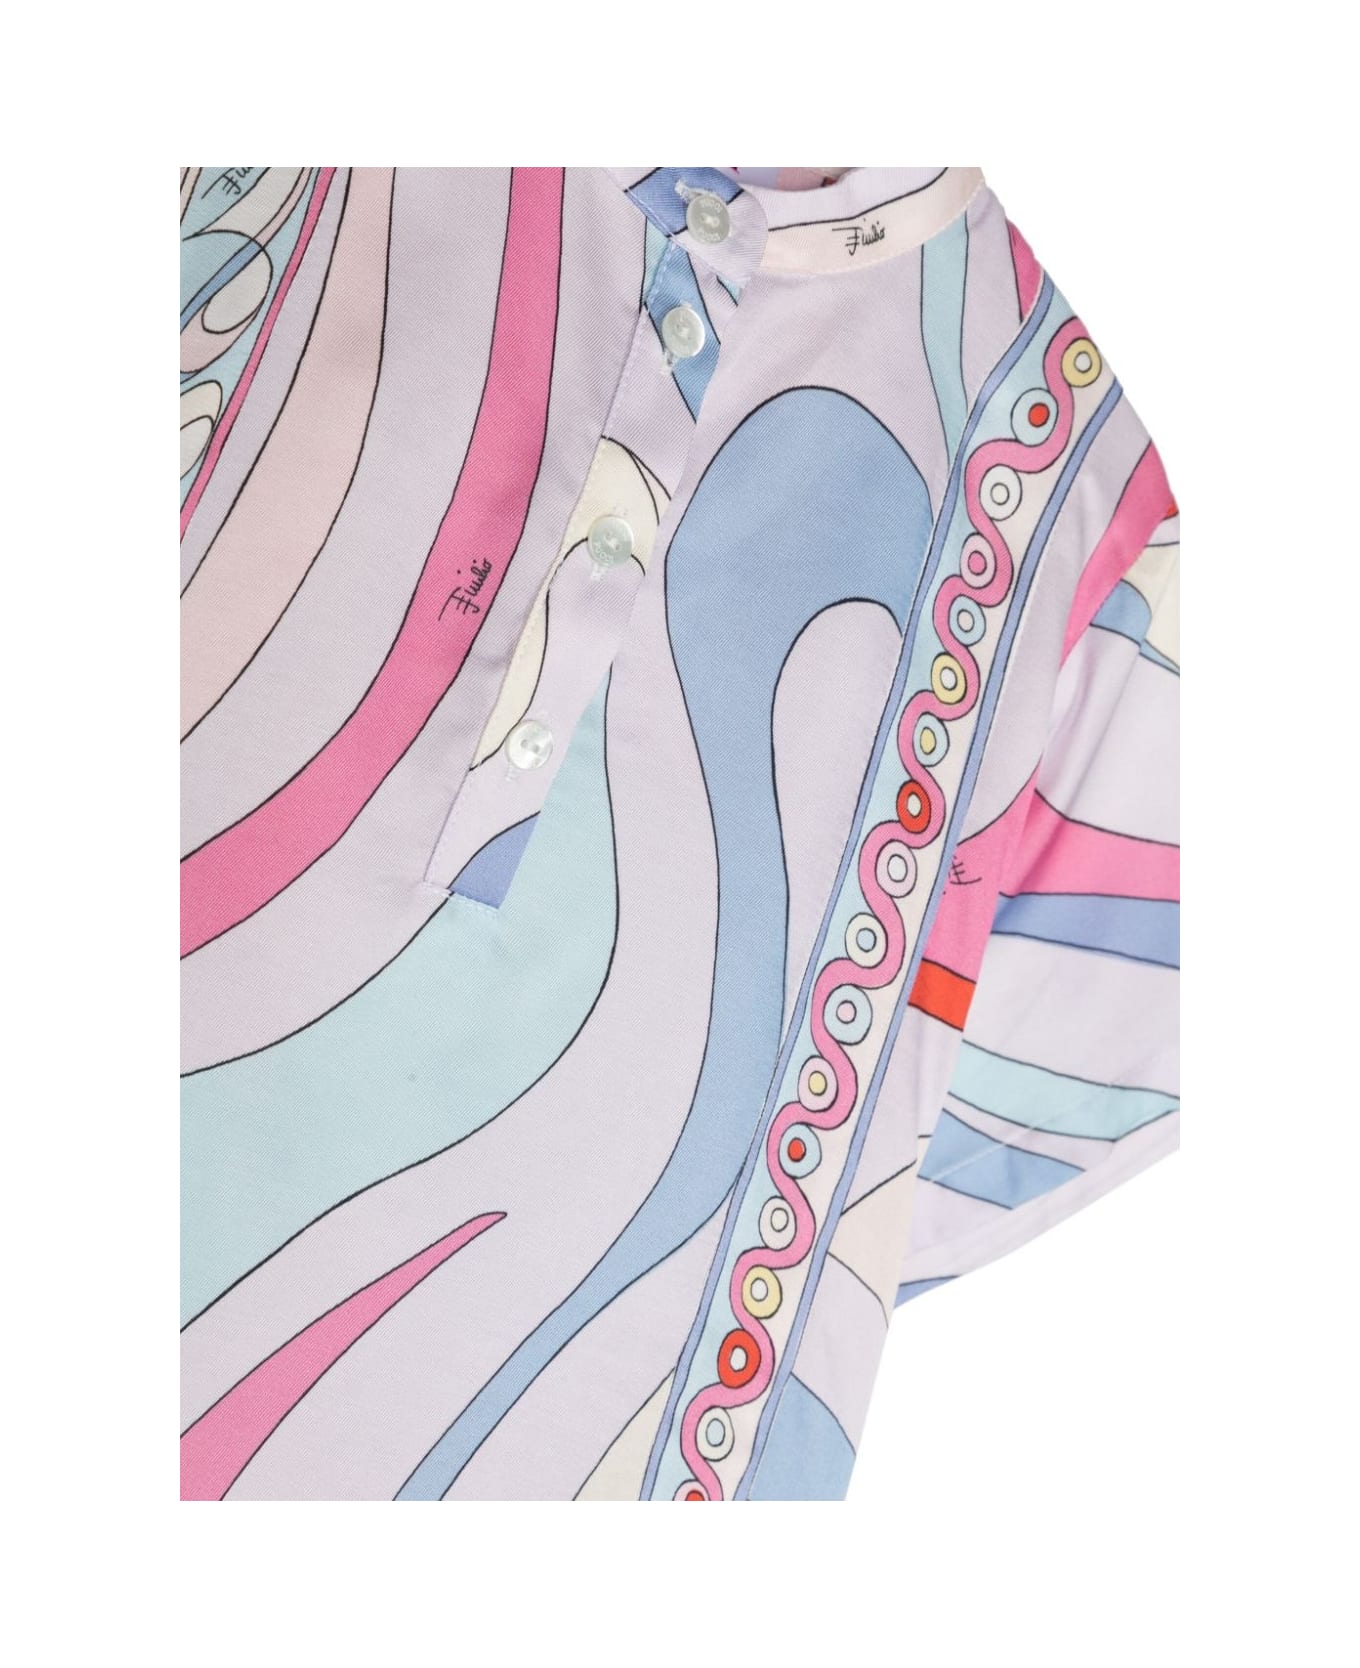 Pucci Shirt With Iris Print - Cream シャツ